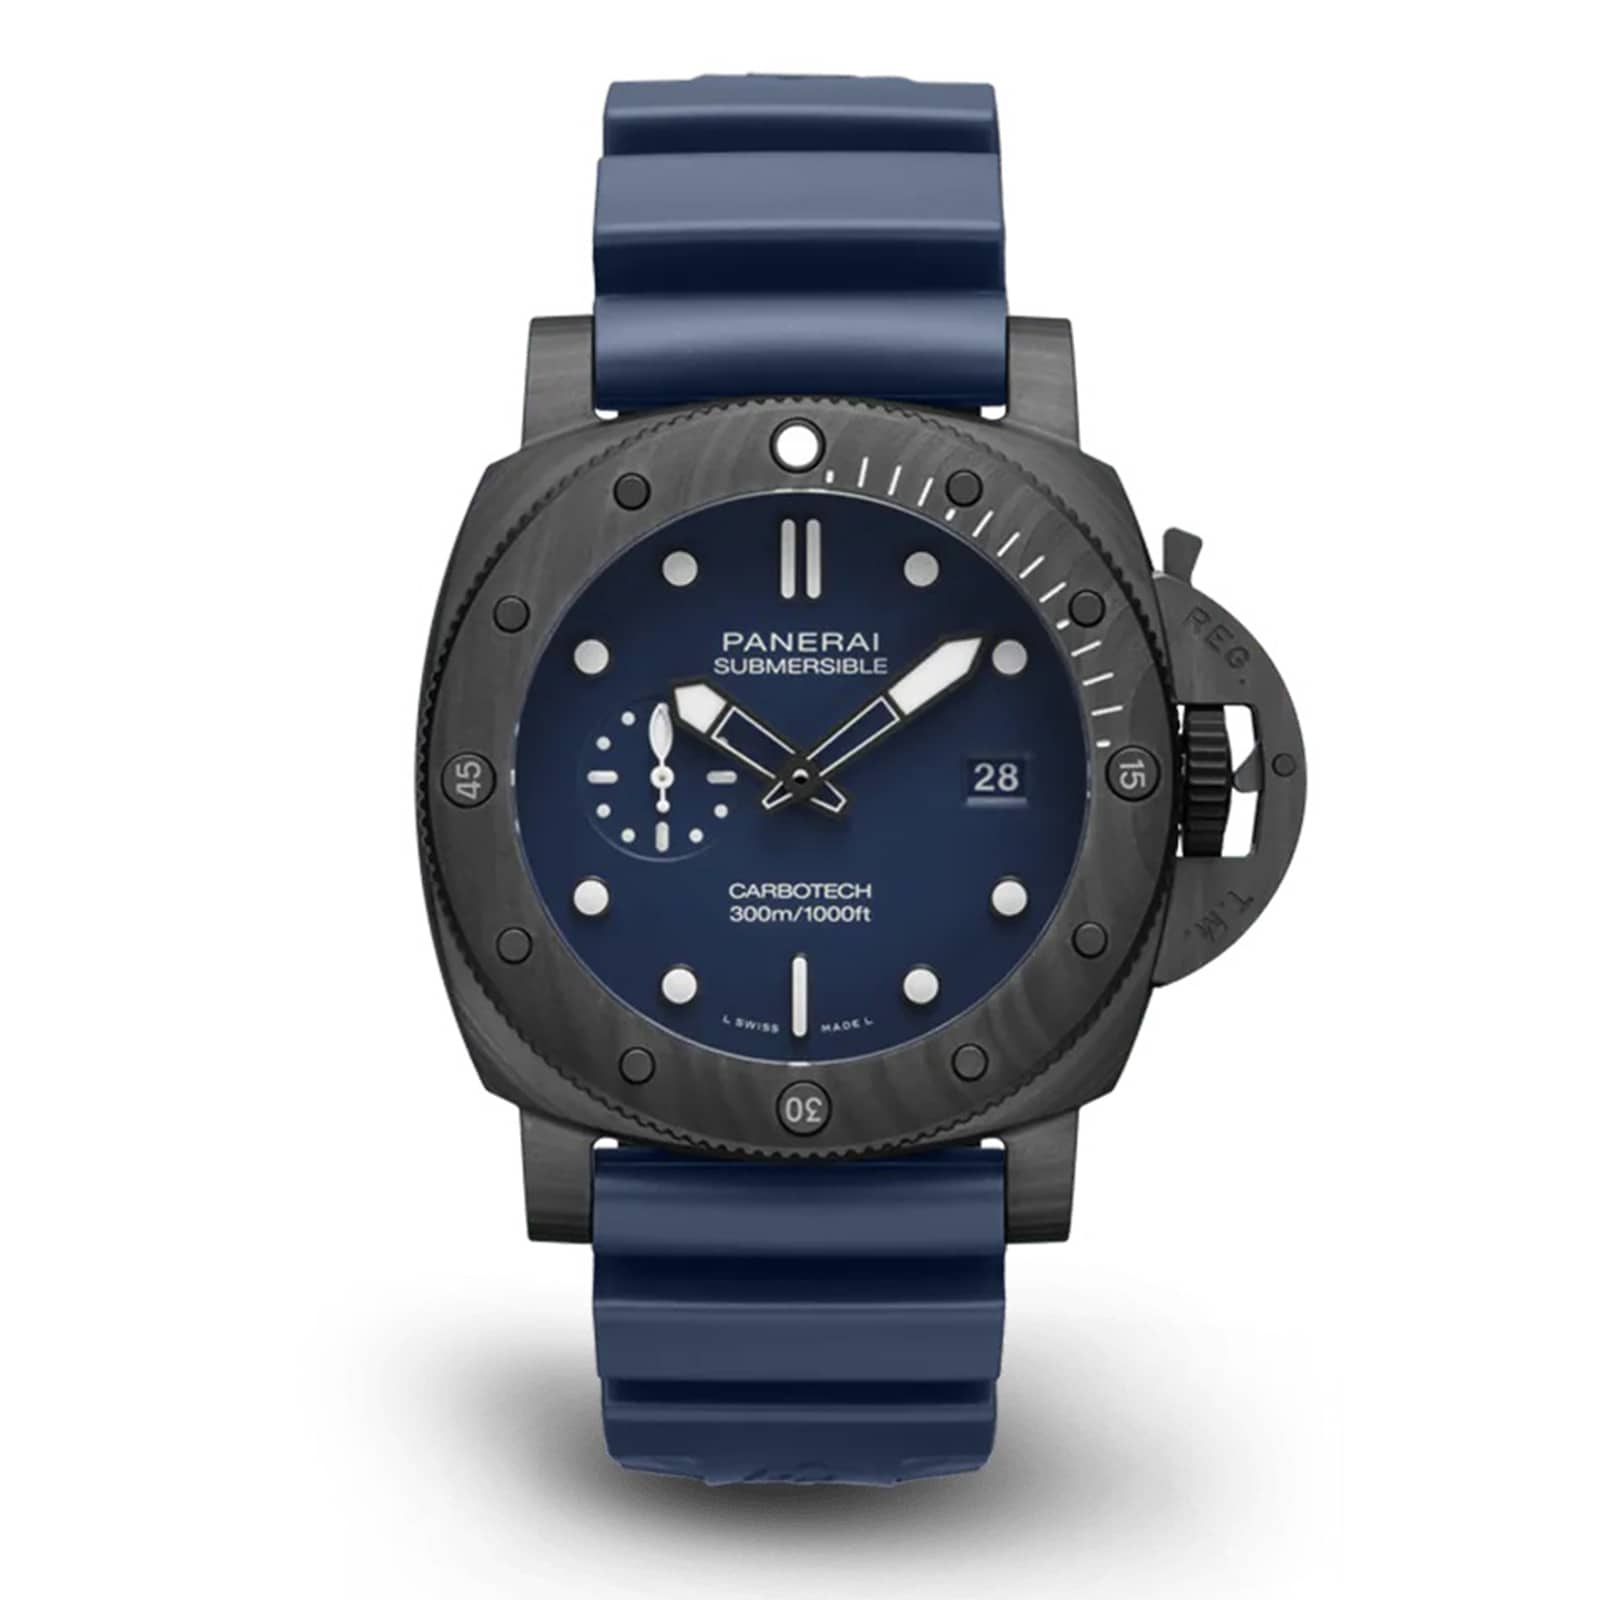 Reloj Panerai Sumergible QuarantaQuattro Carbotech™ Blu Abisso PAM01232